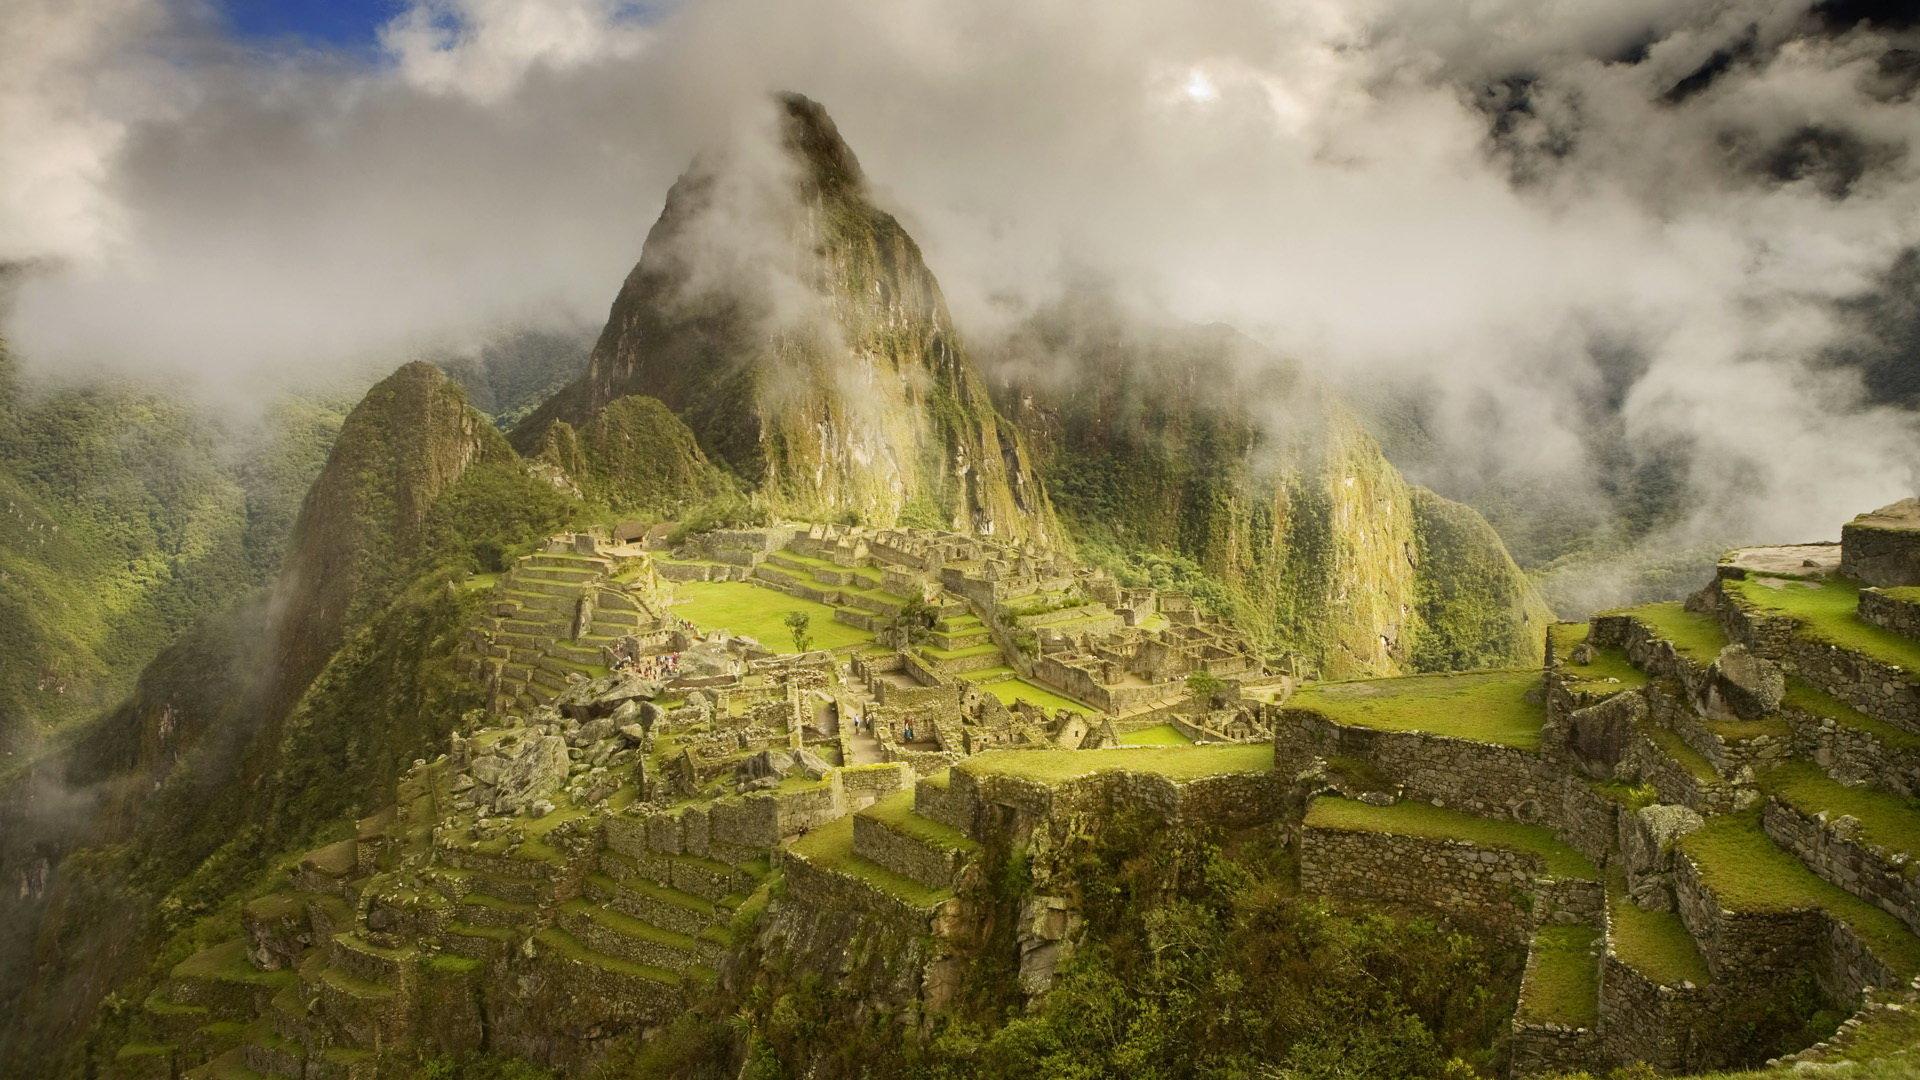 Machu Picchu wallpaper 1920x1080 Full HD (1080p) desktop background